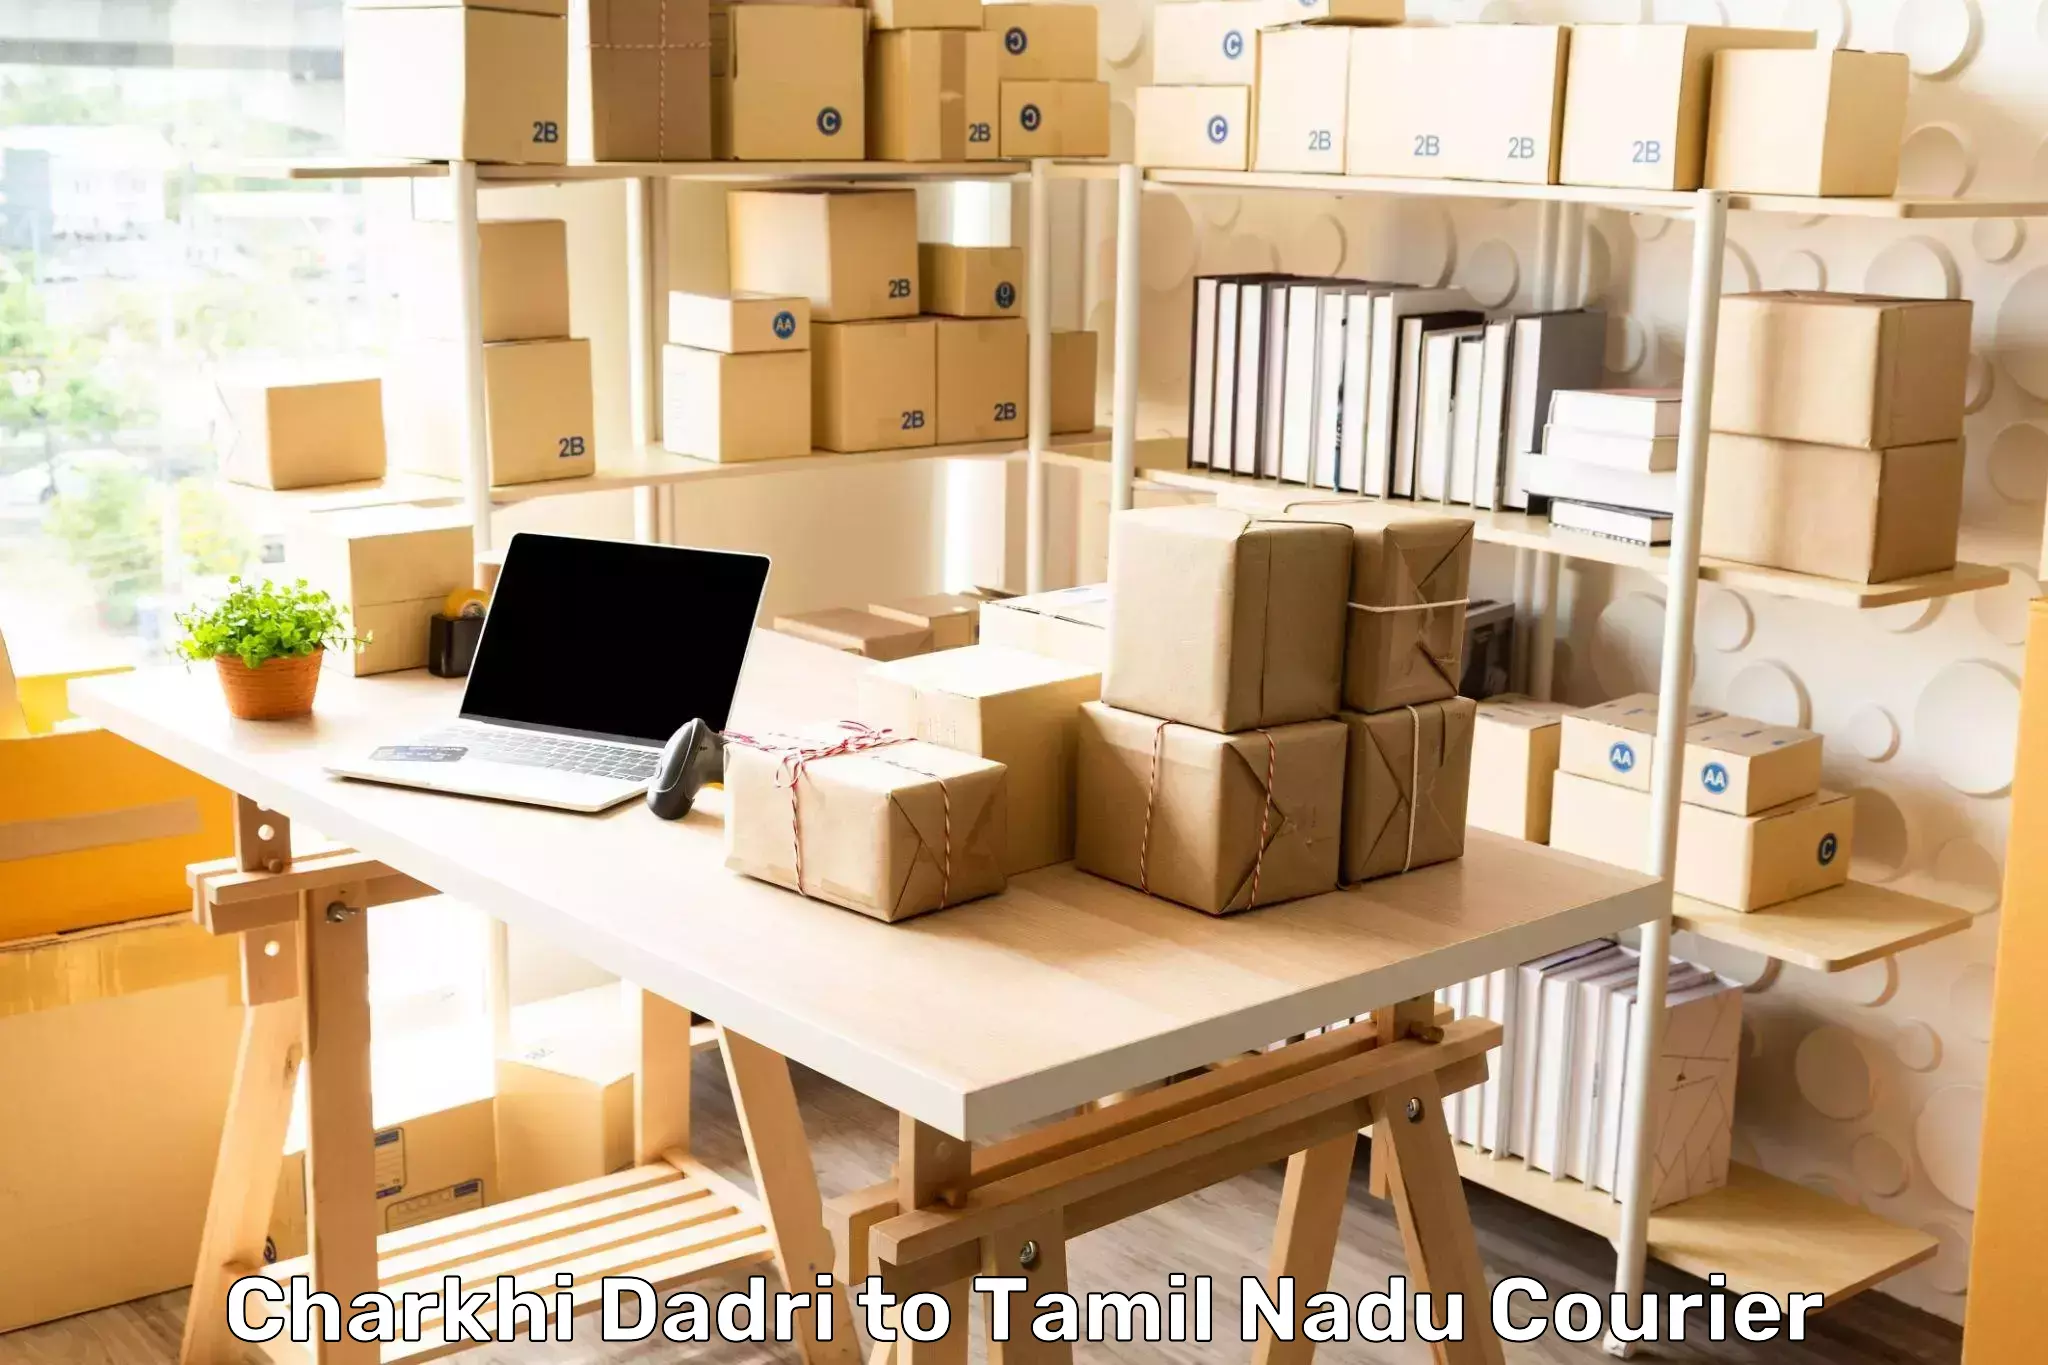 Cost-effective courier options Charkhi Dadri to Panruti